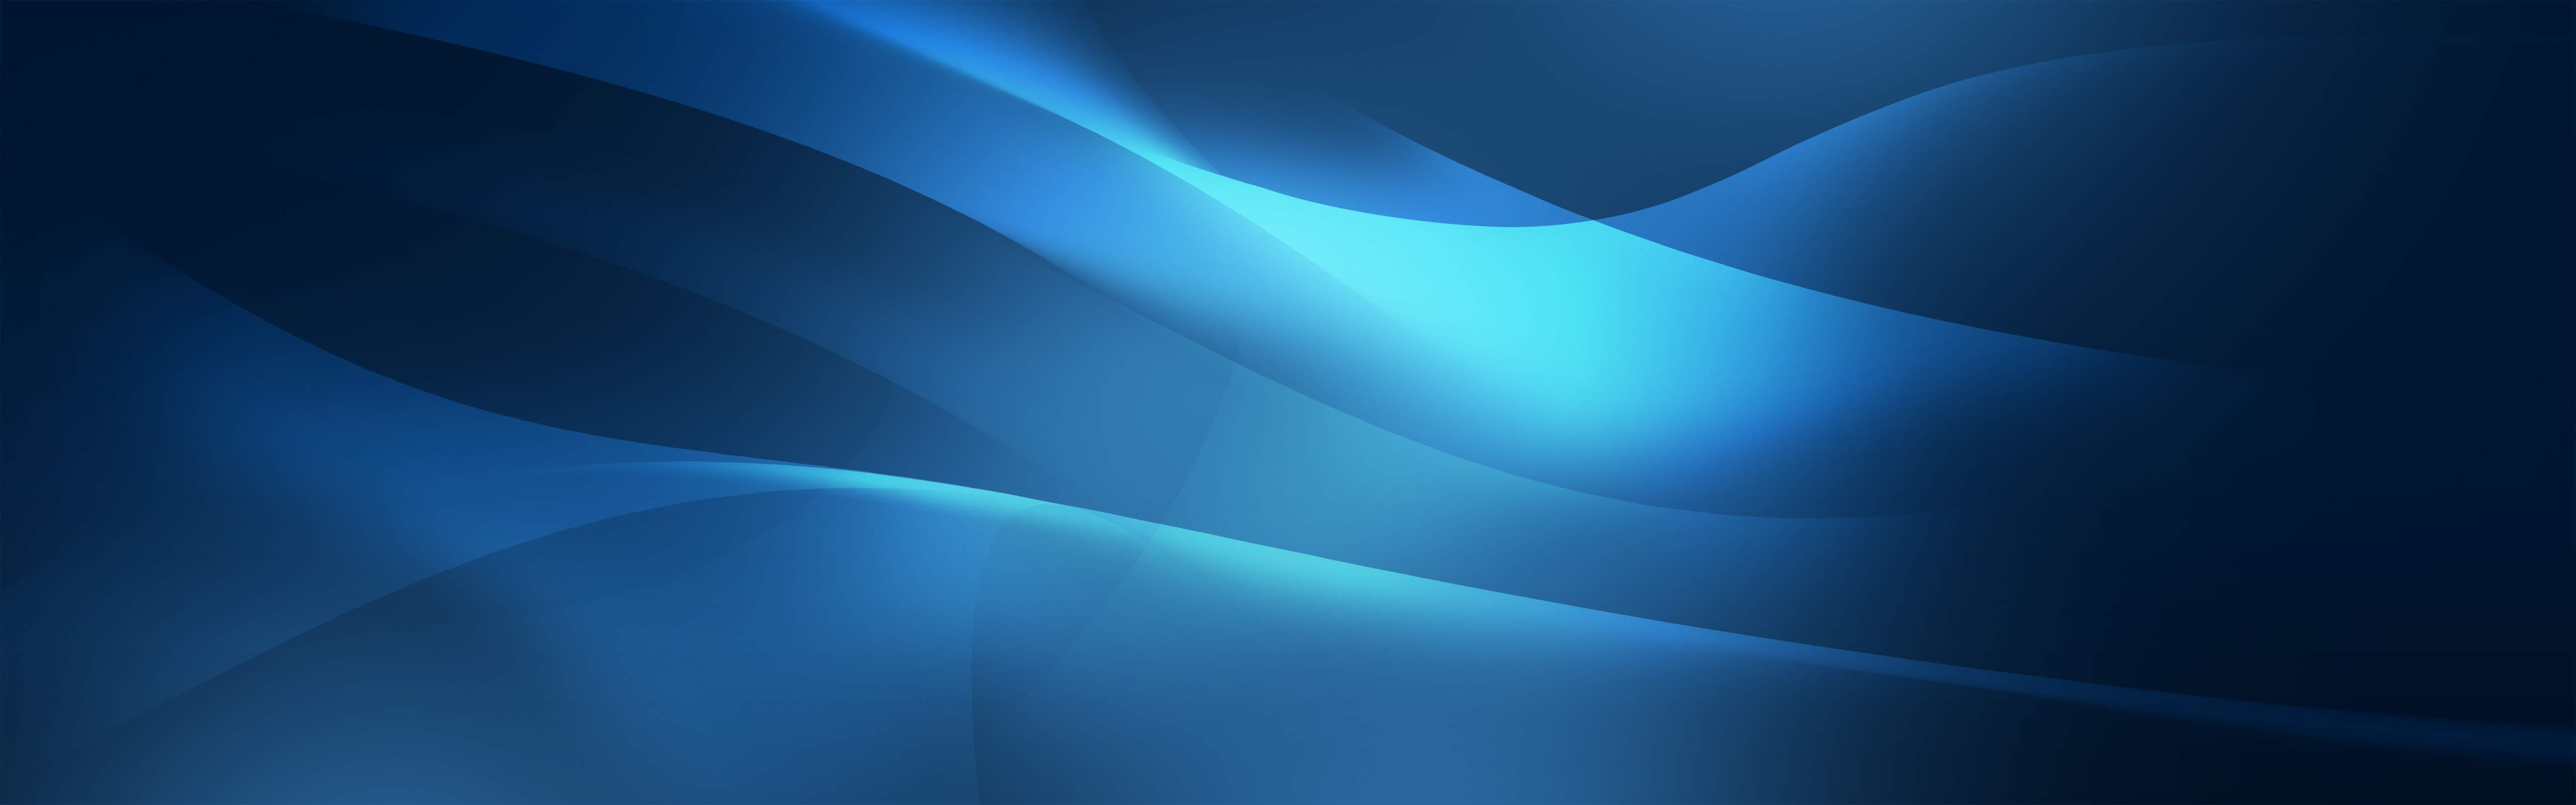 Blue-Background-16-1